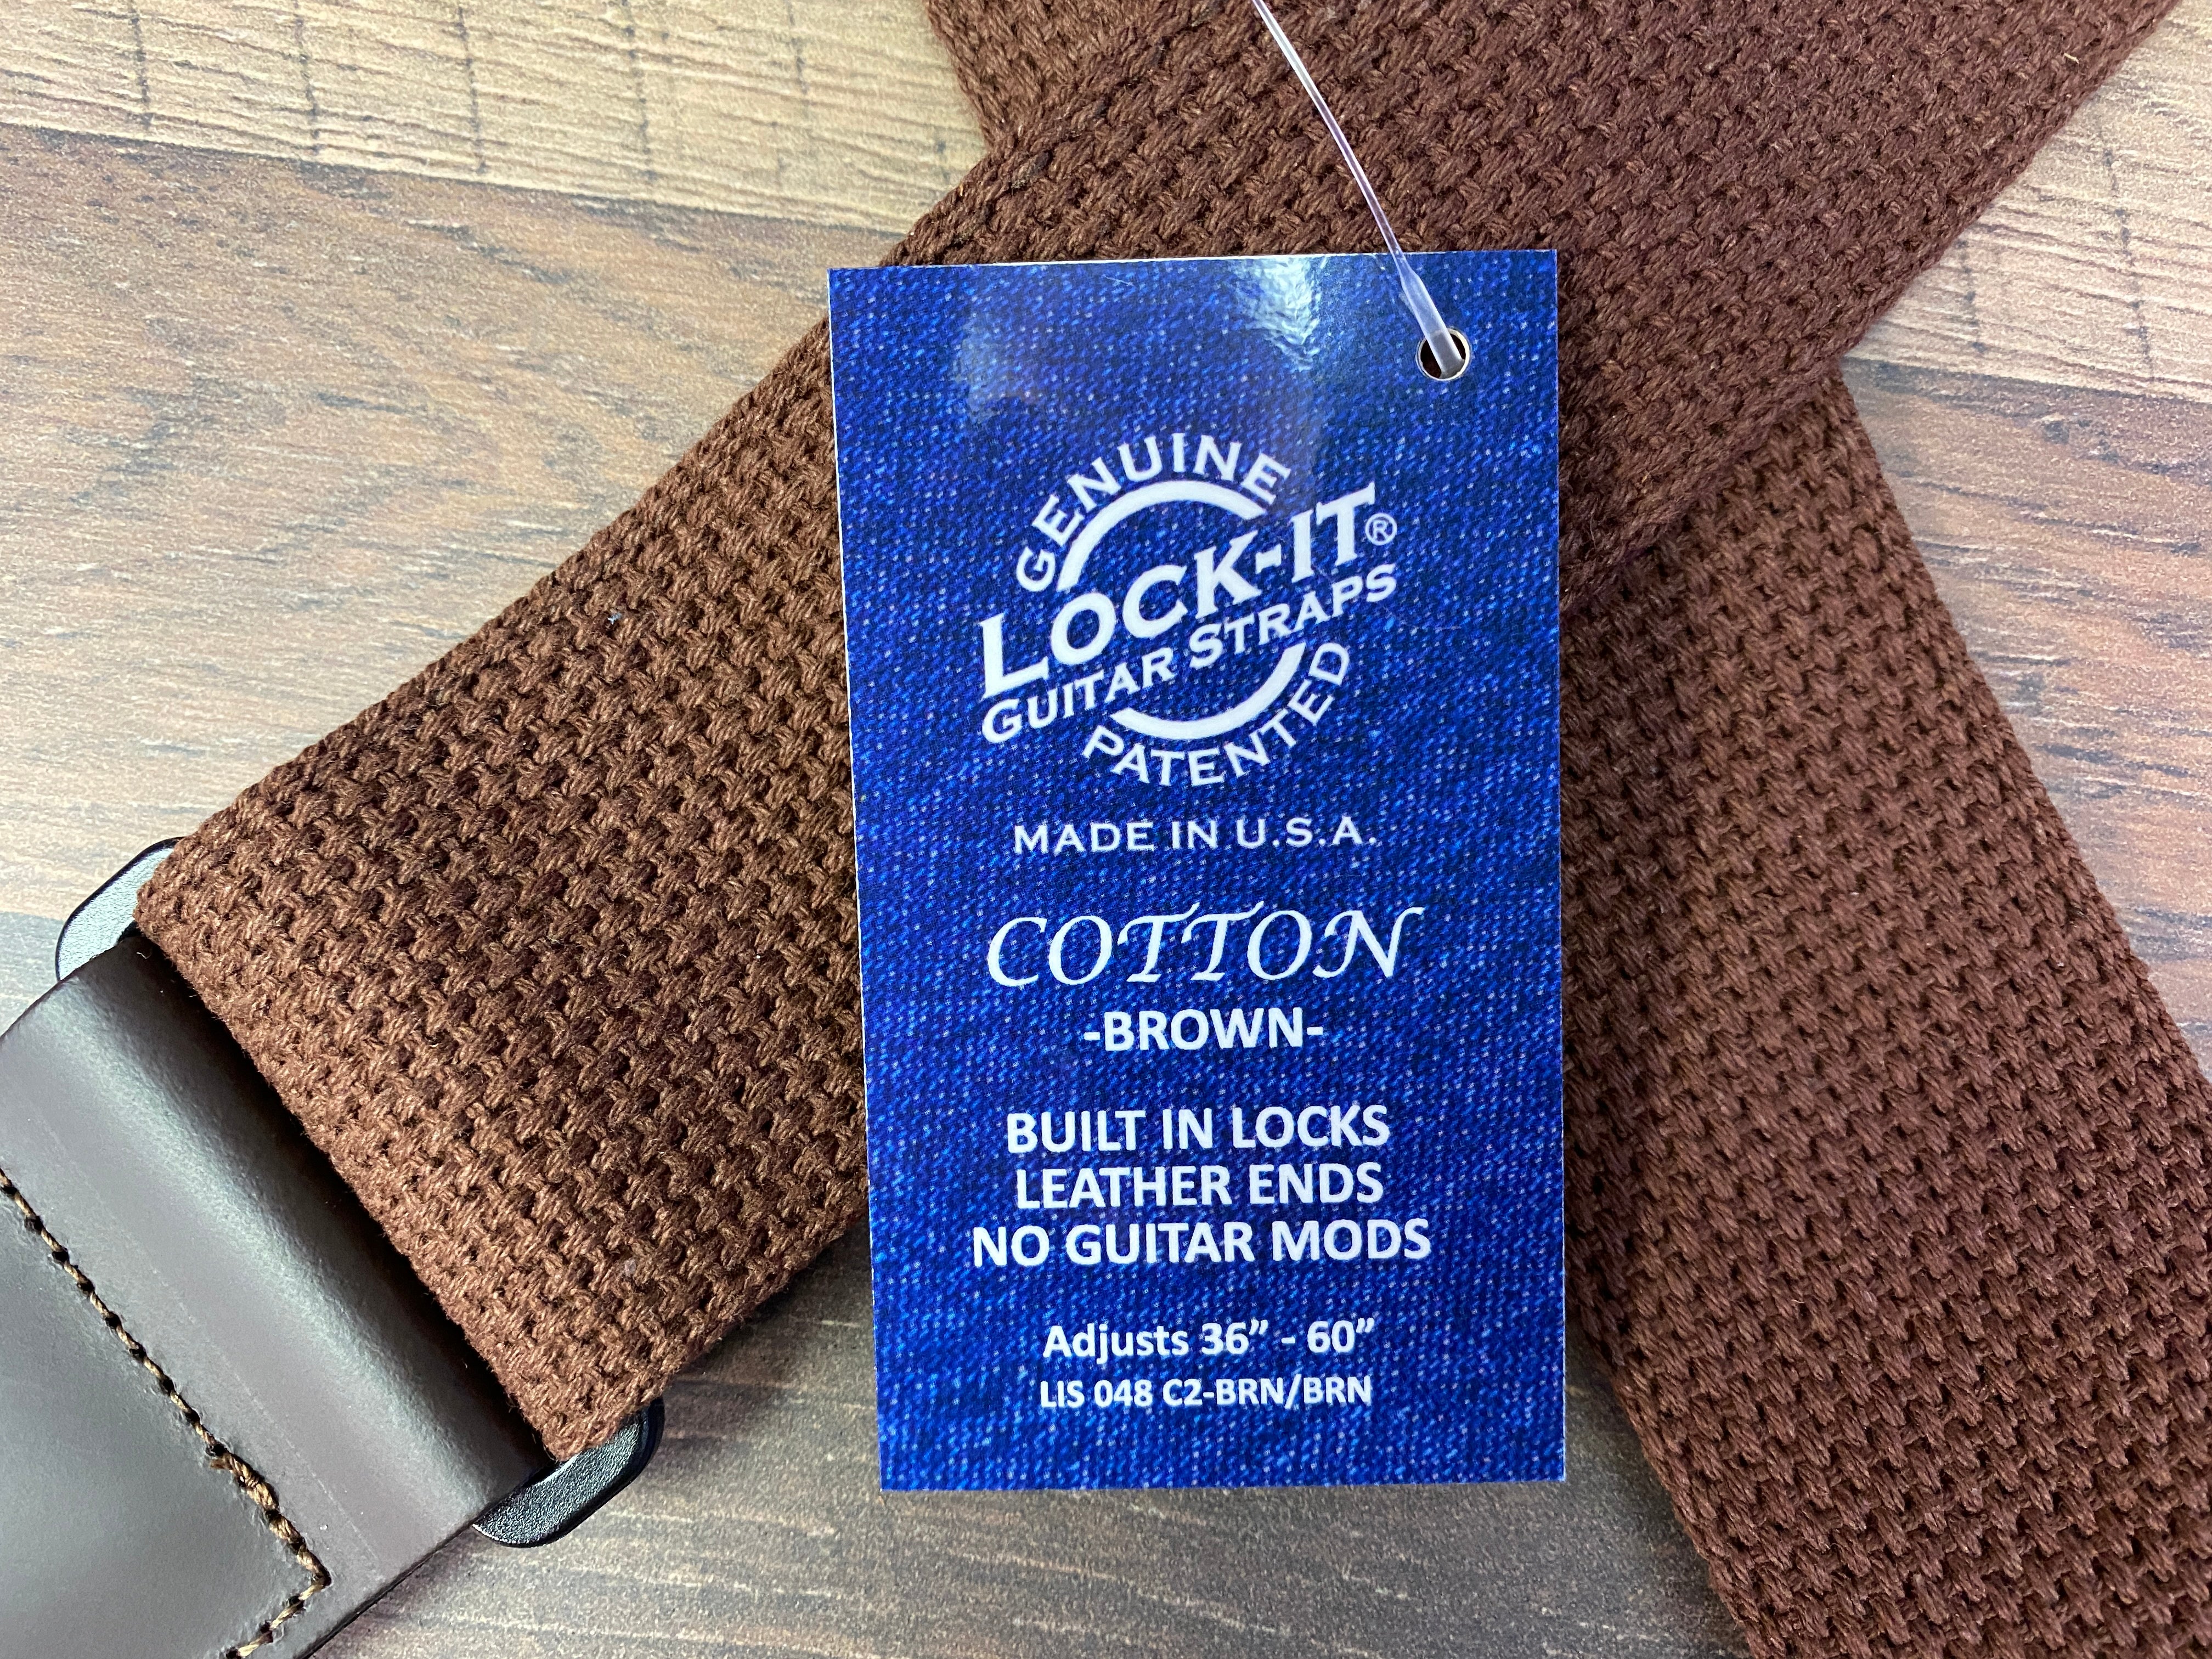 Lock-It LIS-048C2-BRN/BRN Long, 2" Cotton Guitar Strap w/Built in Strap Locks